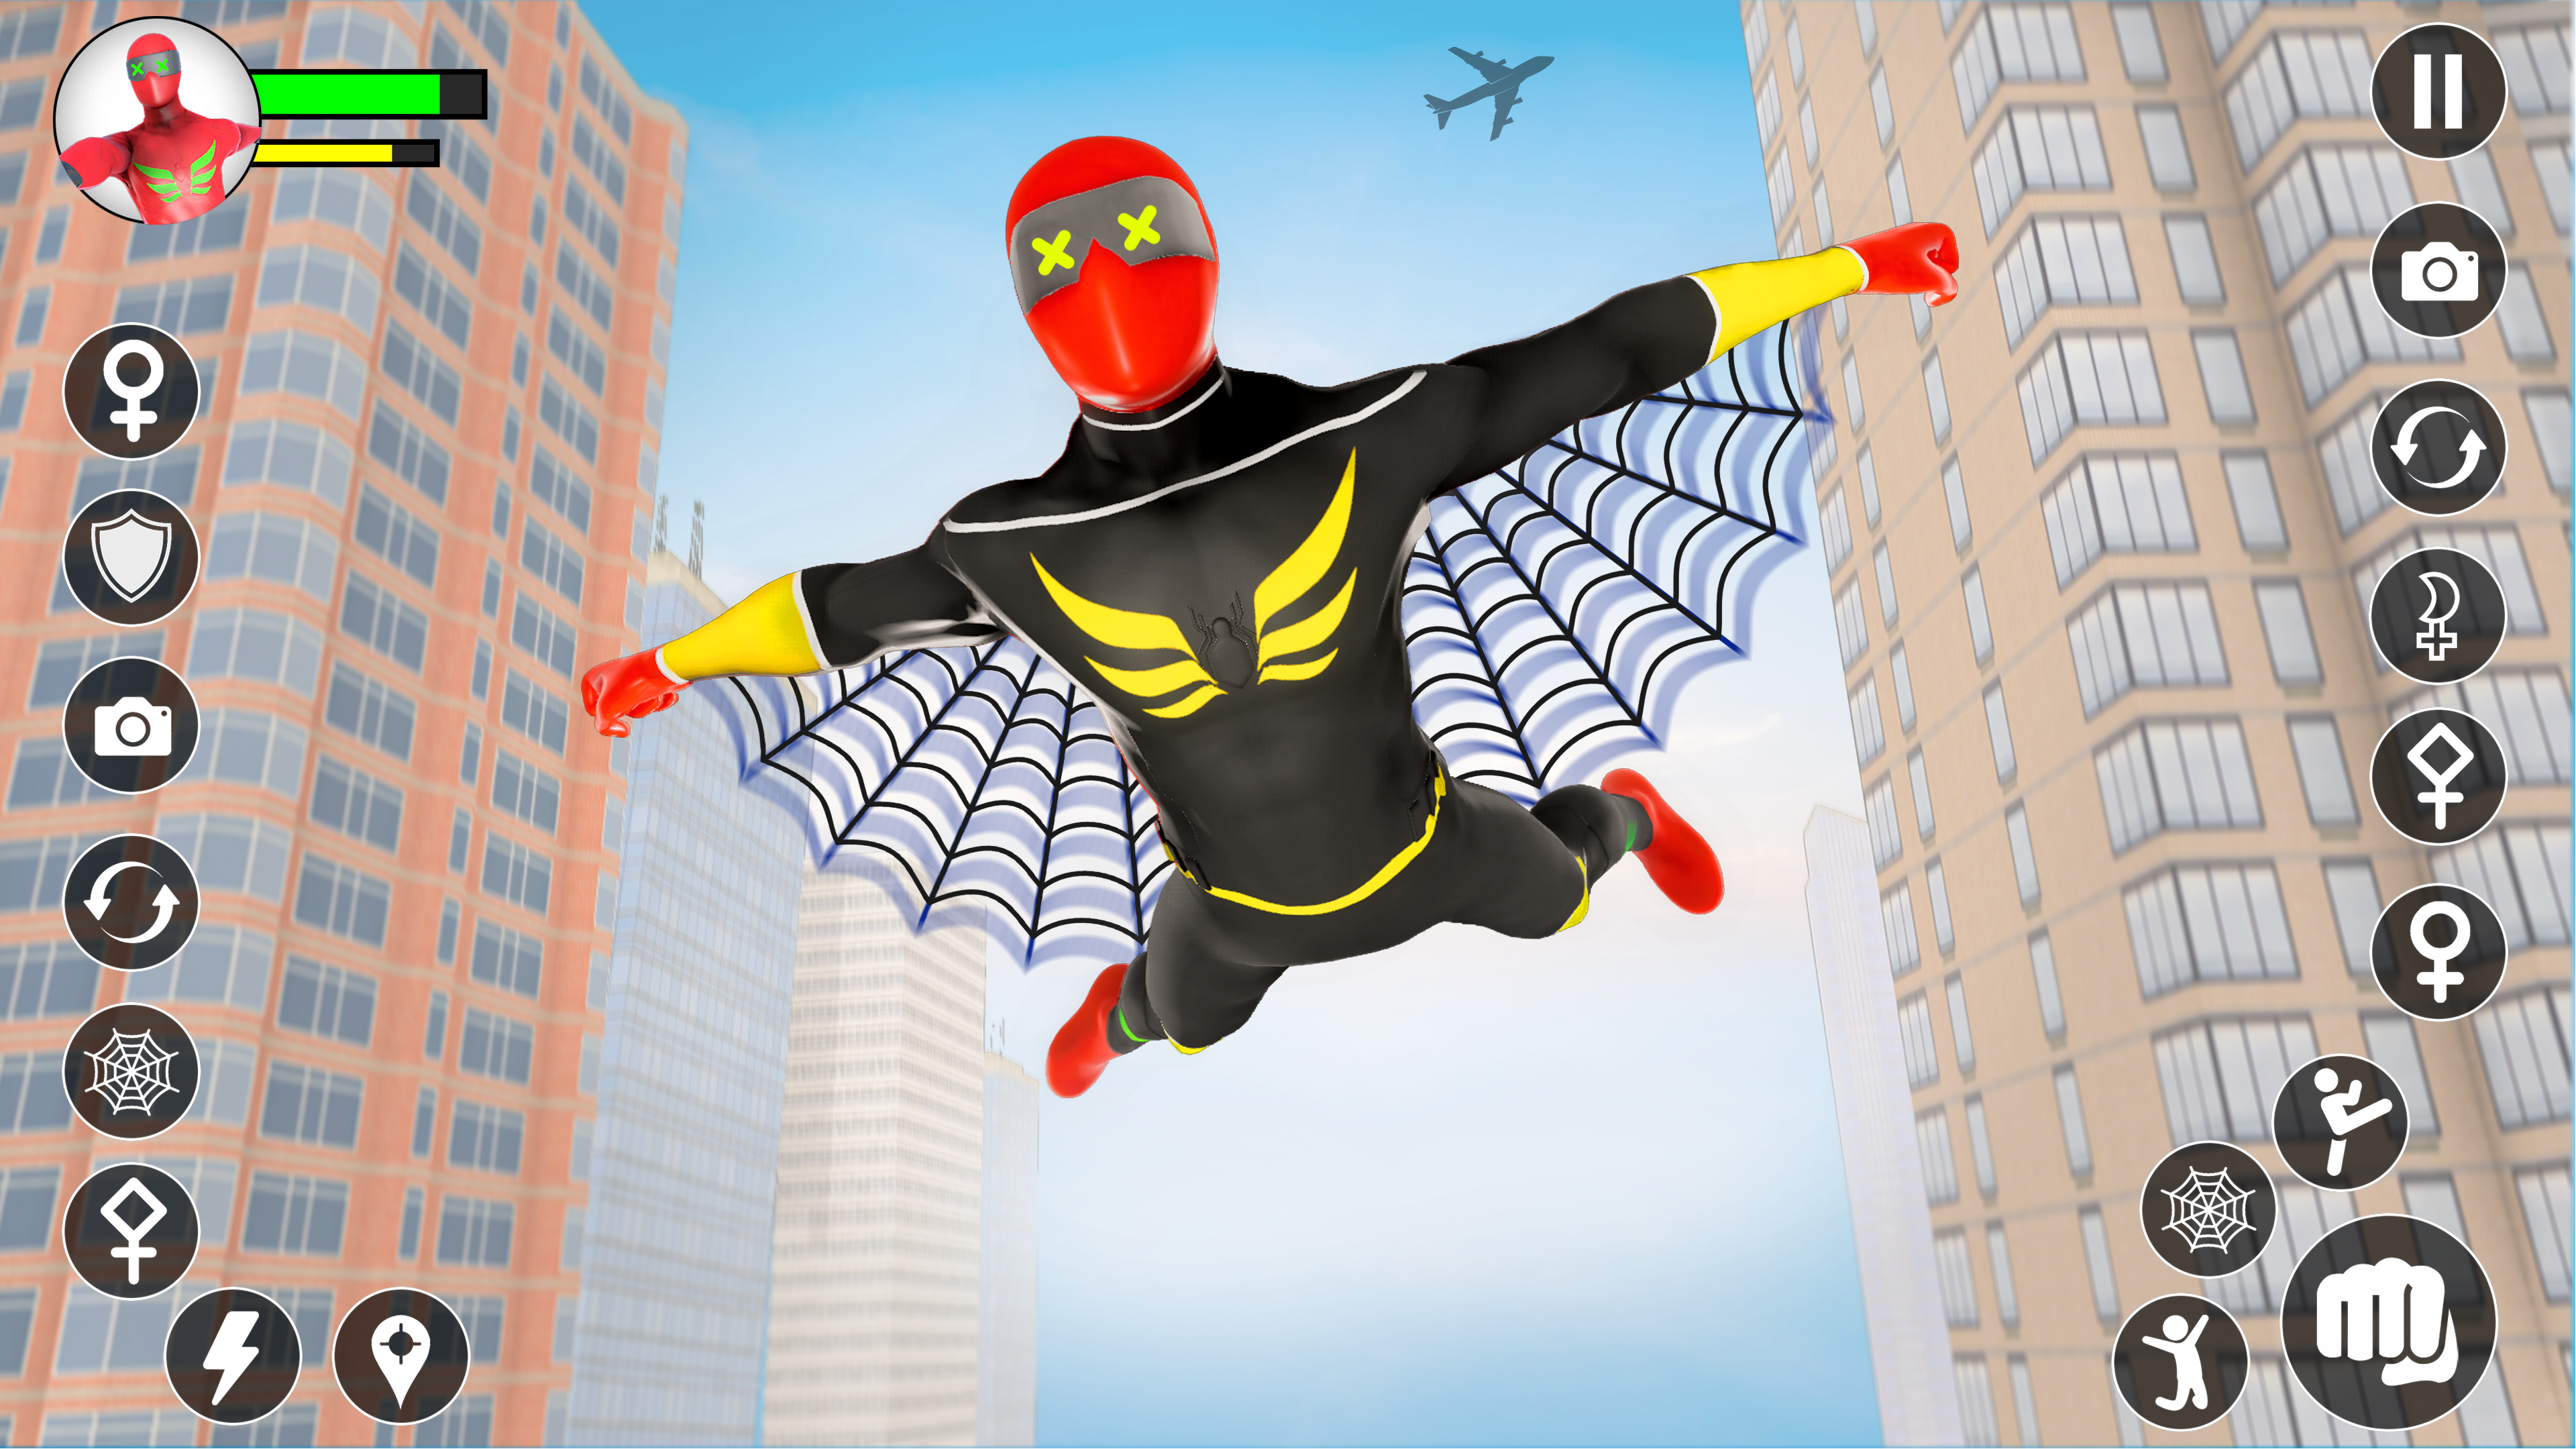 Spider Rope Hero Games and Superhero Games: Flying Hero Spider Fighter Hero  Games, Speed Hero City Rescue Game Spider Hero Fighting Game Flying  Superhero Spider Hero Man Game::Appstore for Android